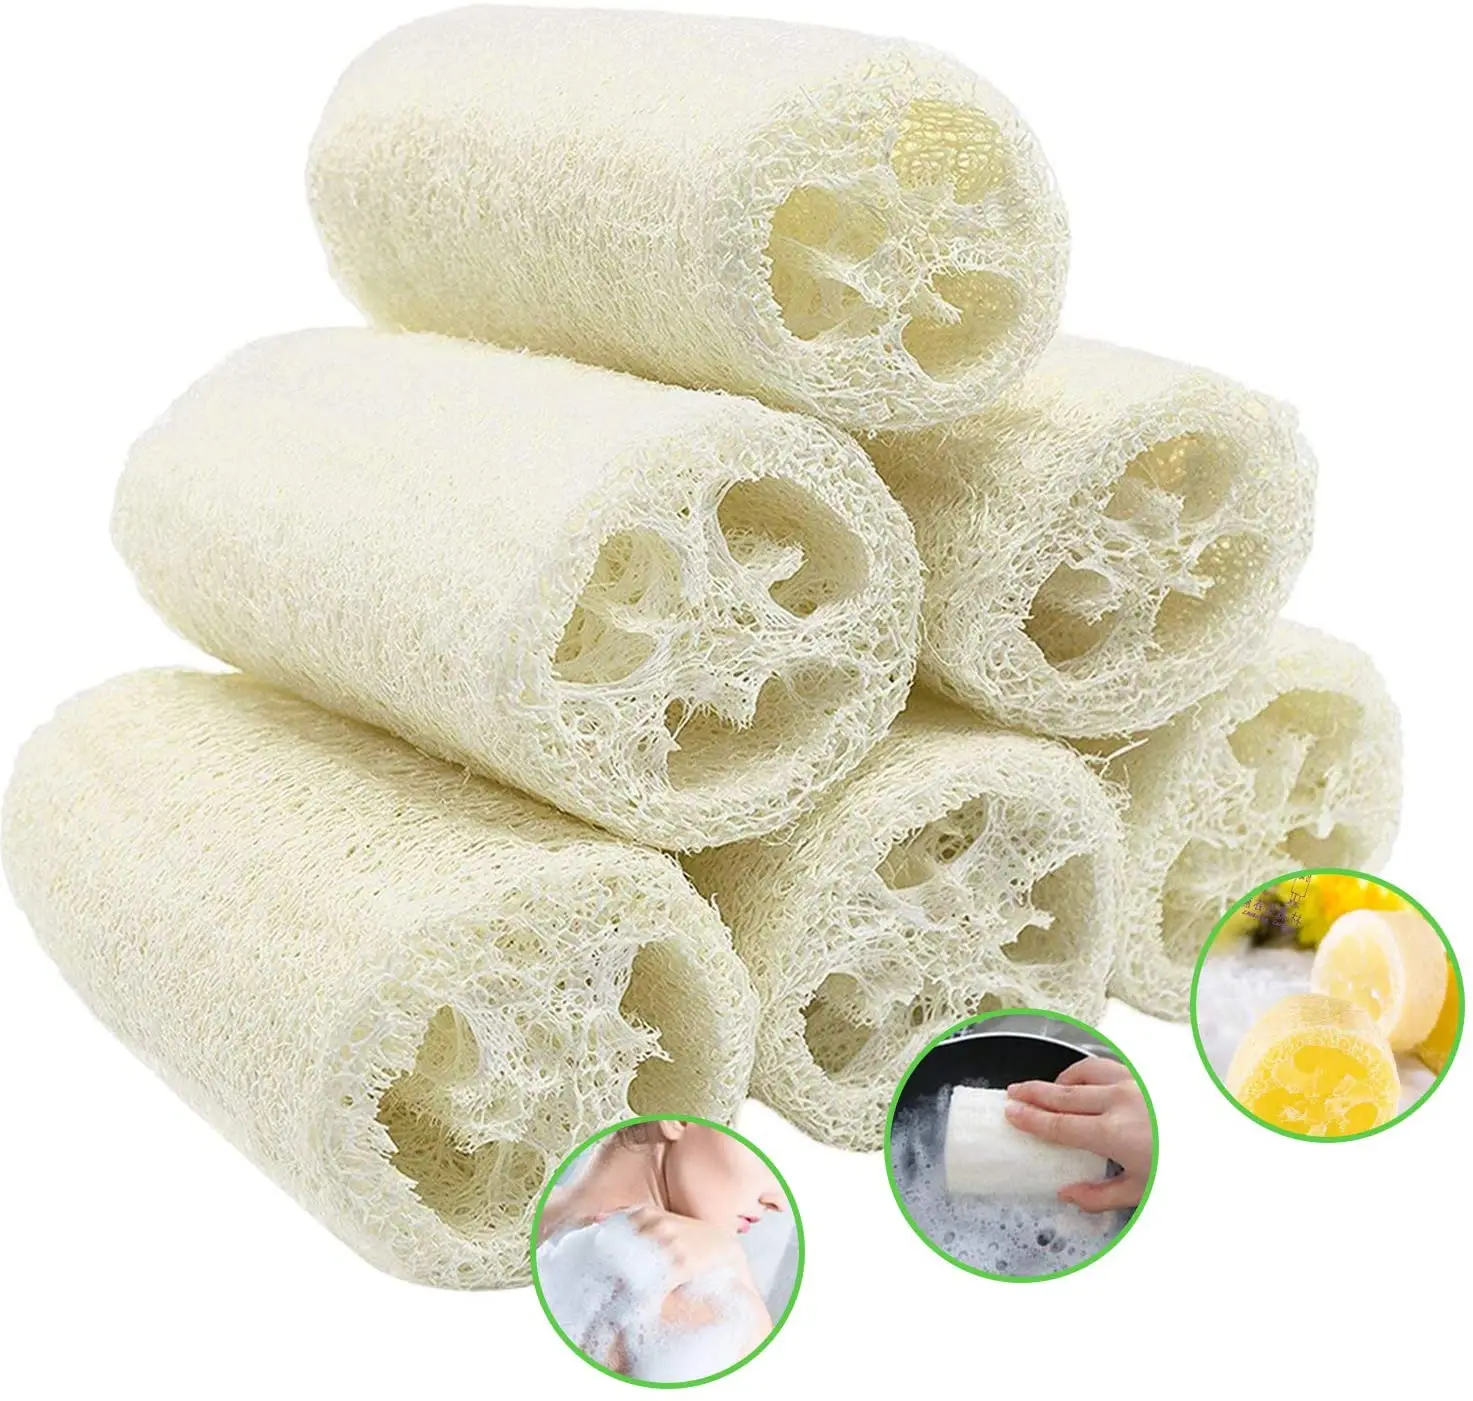 

100% Natural ECO-Friendly Biodegradable Loofahs Loofah Spa Exfoliating Scrubber Natural Bath Loufah Sponge